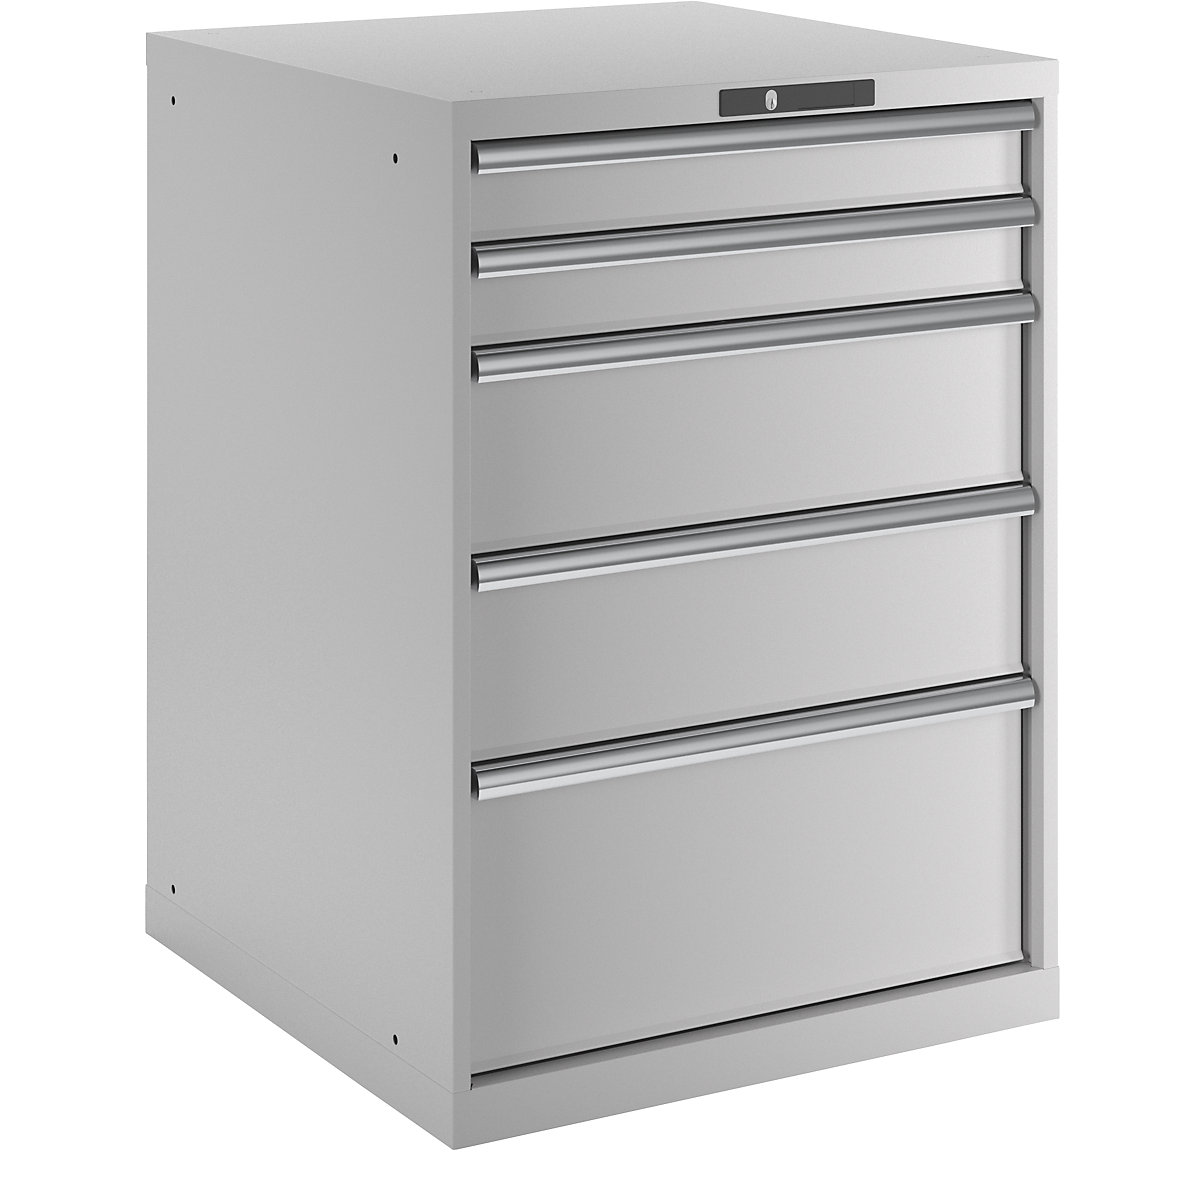 Drawer cupboard, 5 drawers – LISTA, WxDxH 717 x 725 x 1000 mm, light grey-3